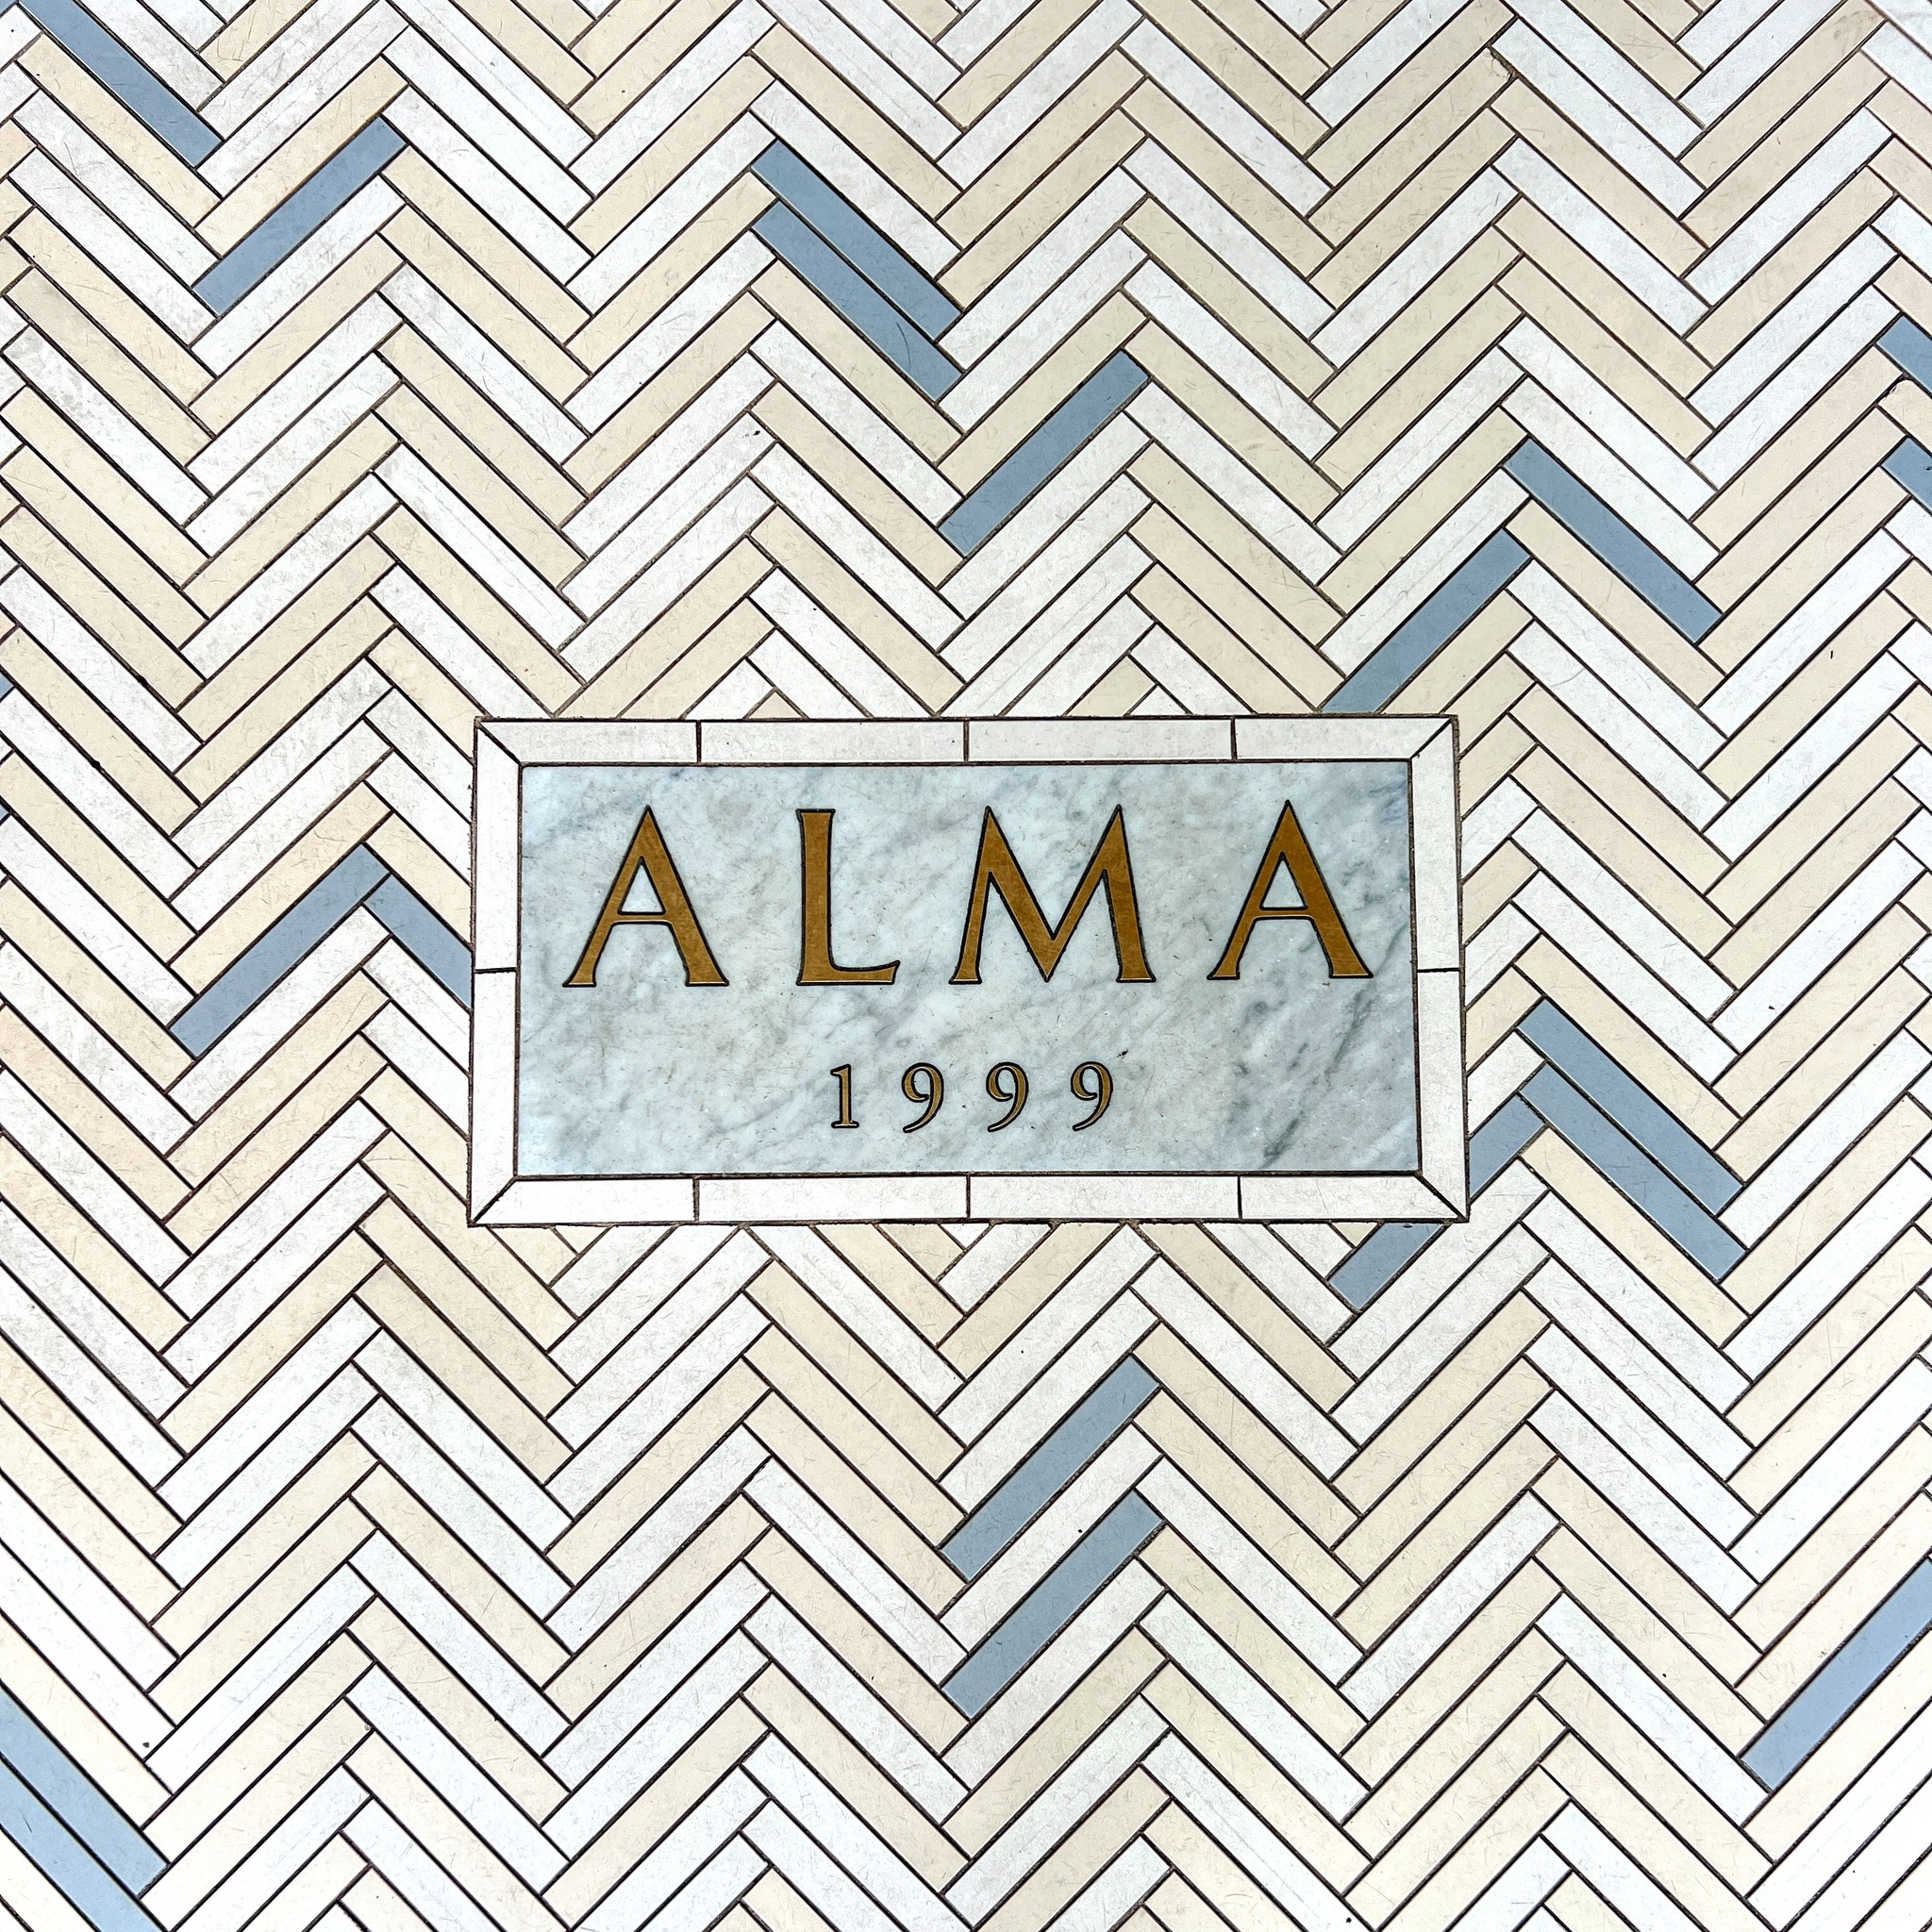 Image result for Alma Restaurant @ Alma